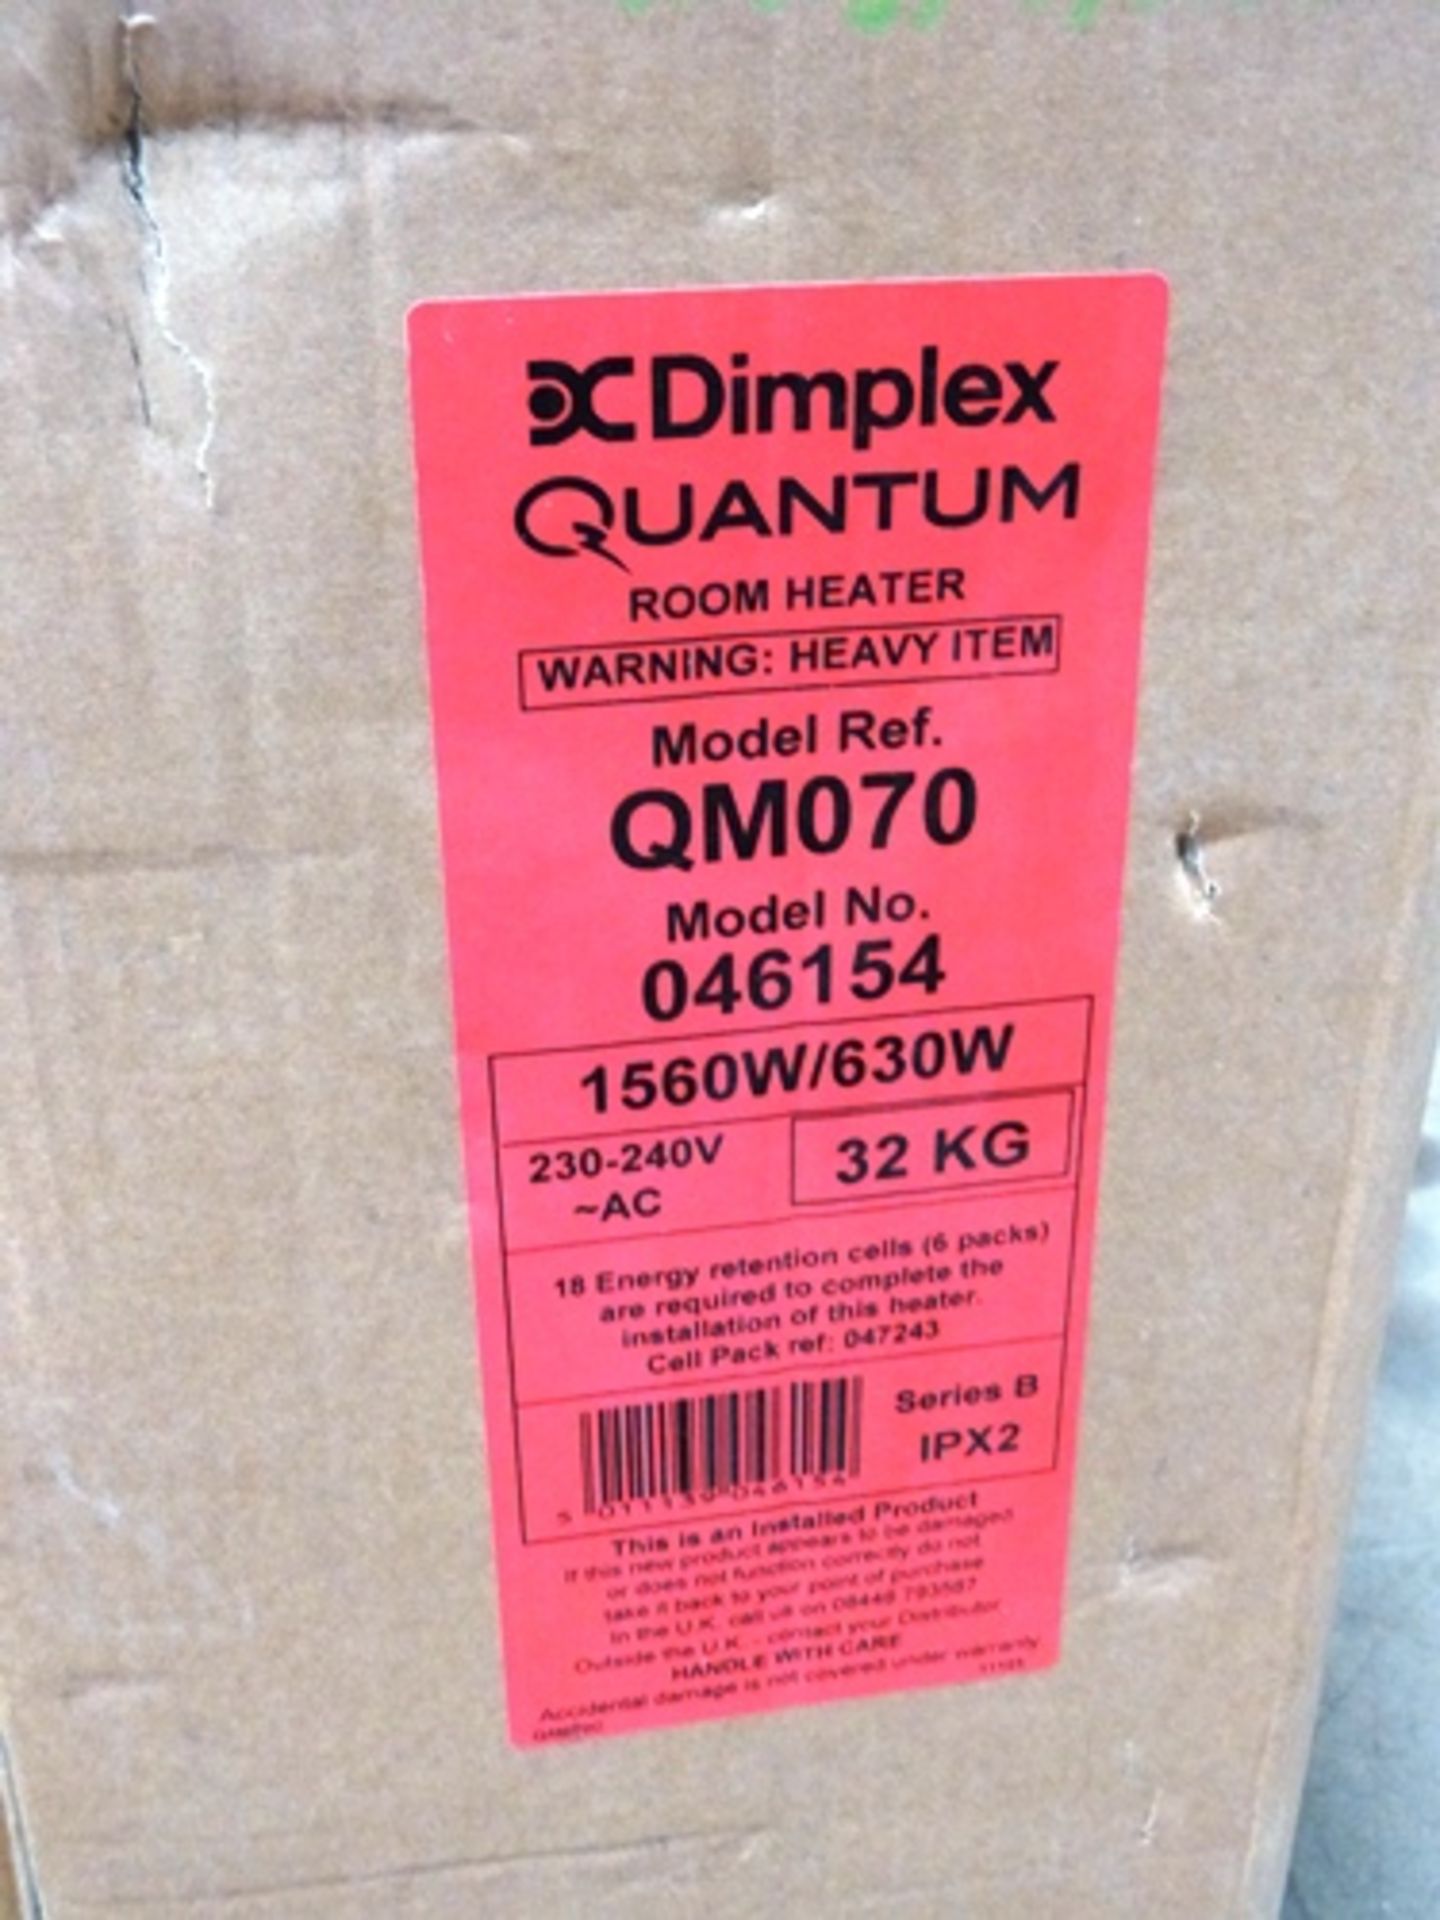 1 x DIMPLEX QUANTUM QM070 046154 Room Heater 230-240V 1560W/630W complete with retention cells.